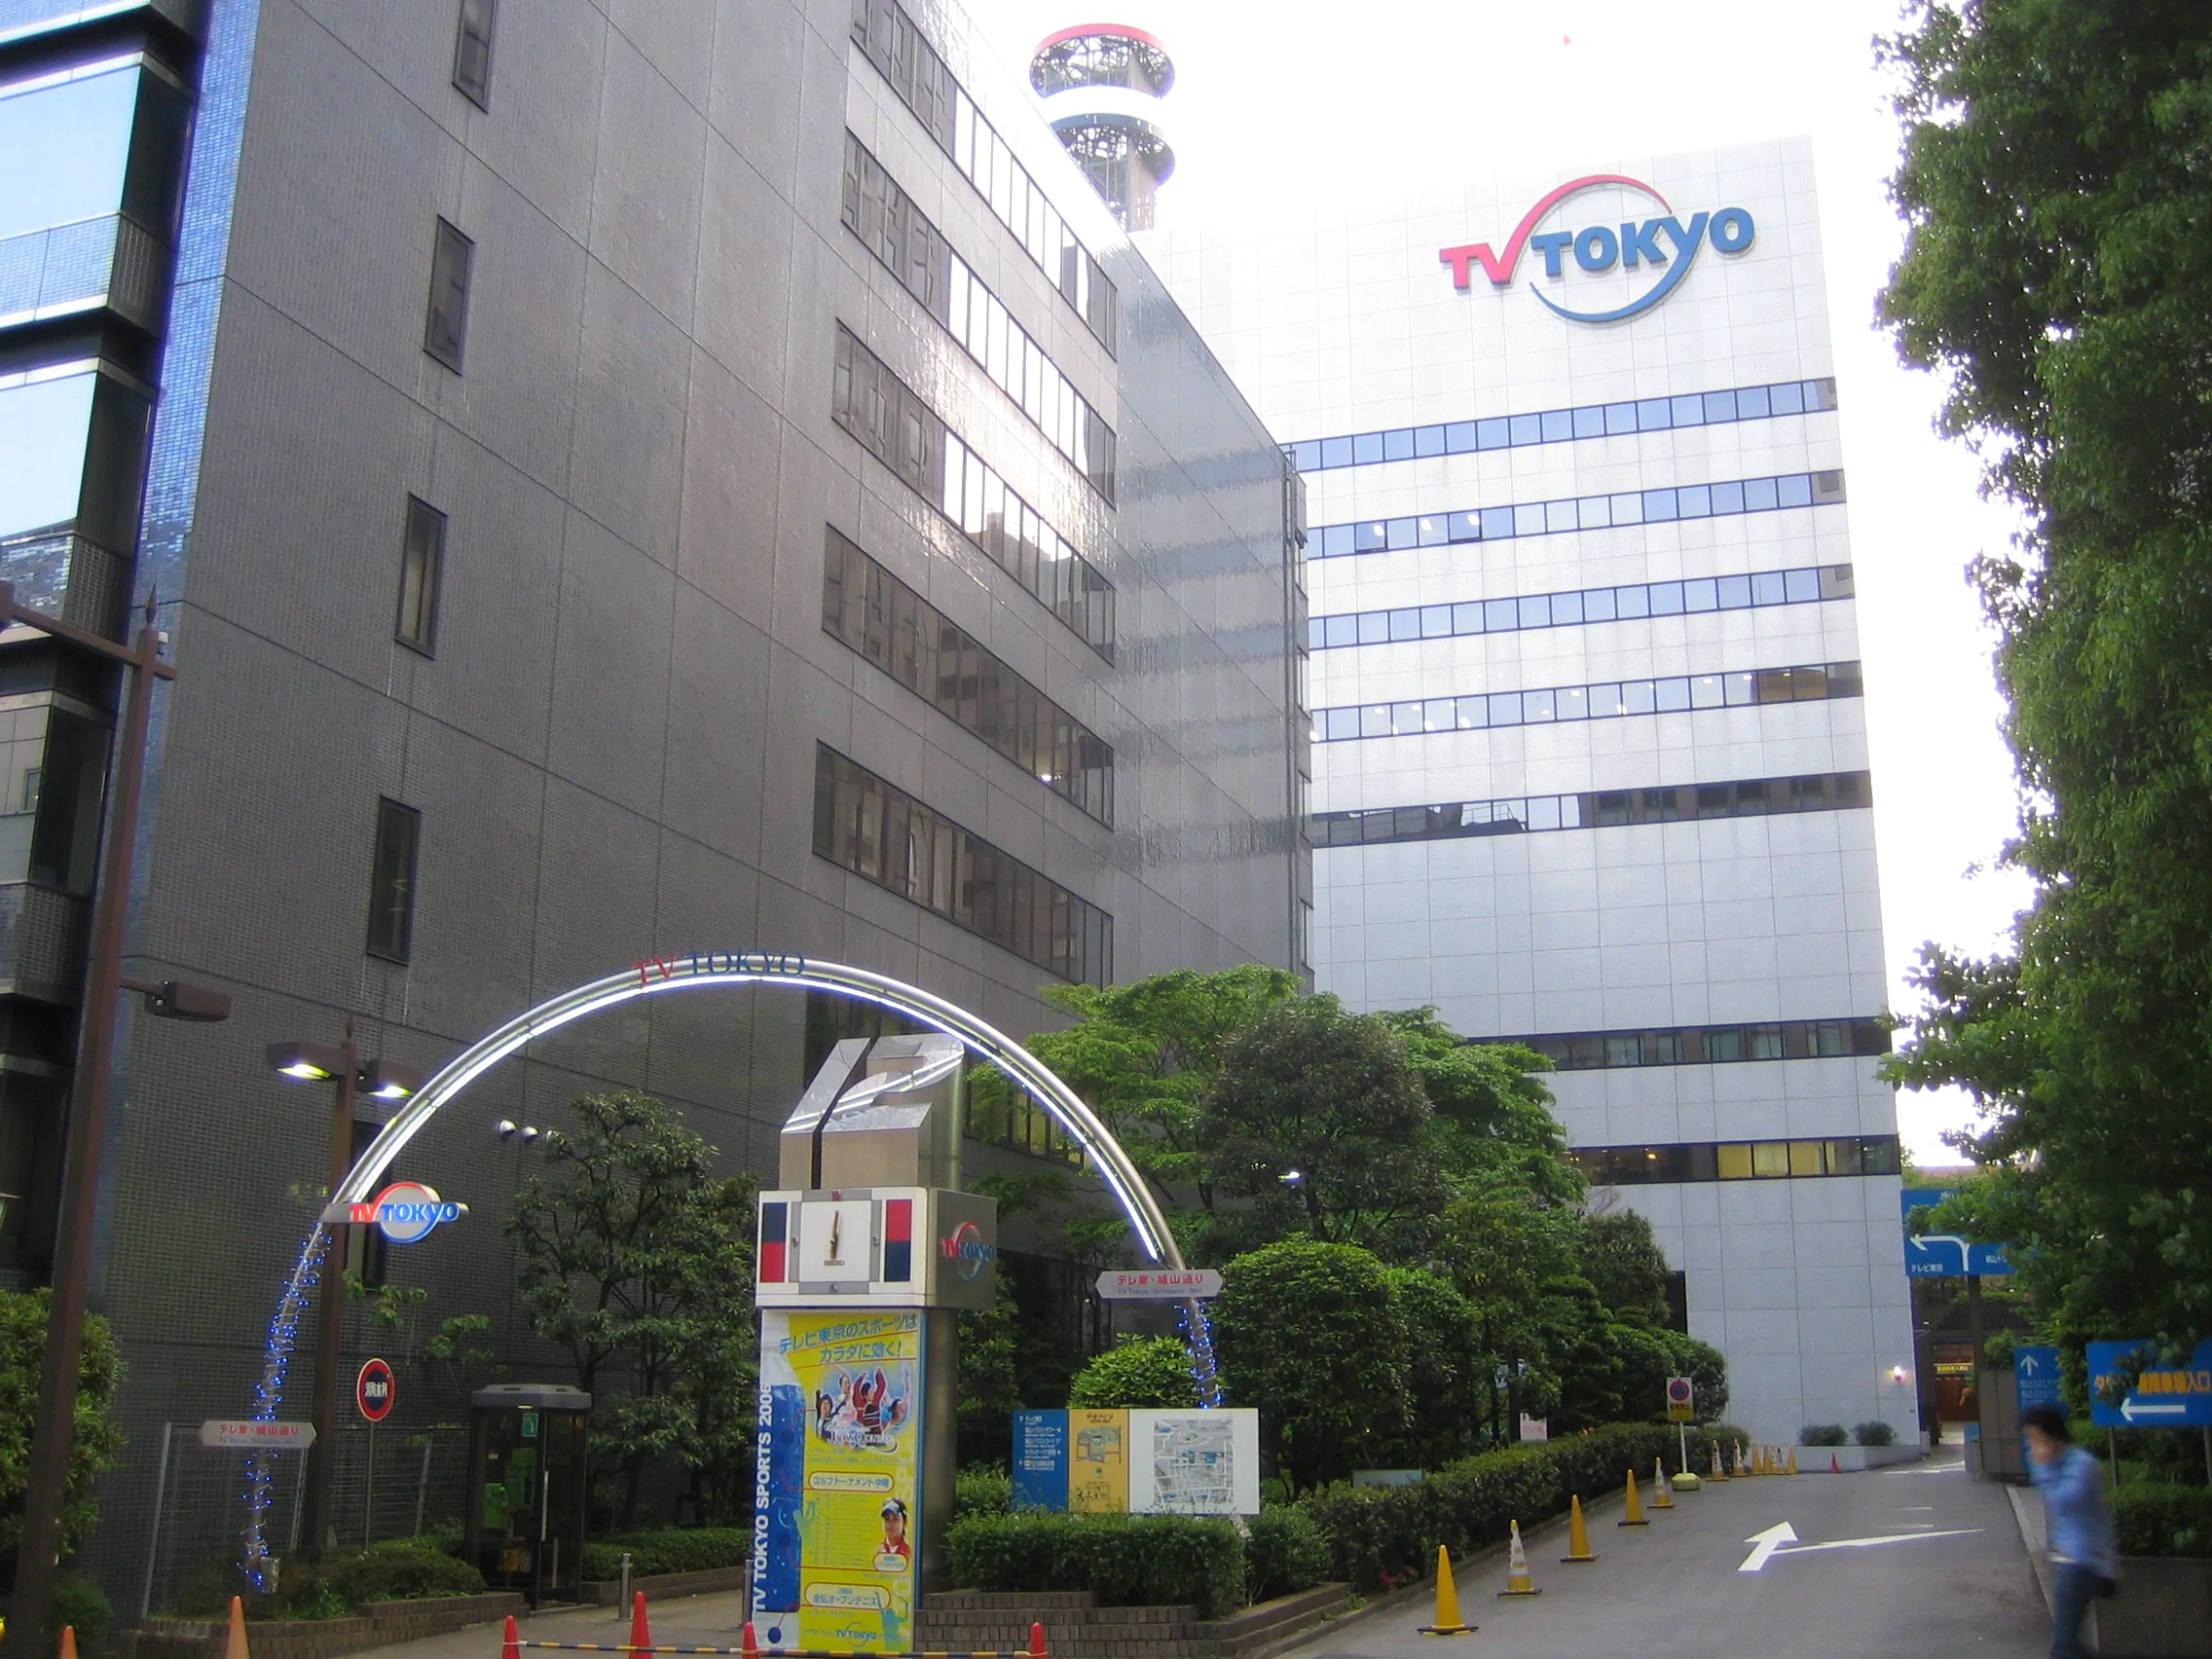 TV Tokyo head office